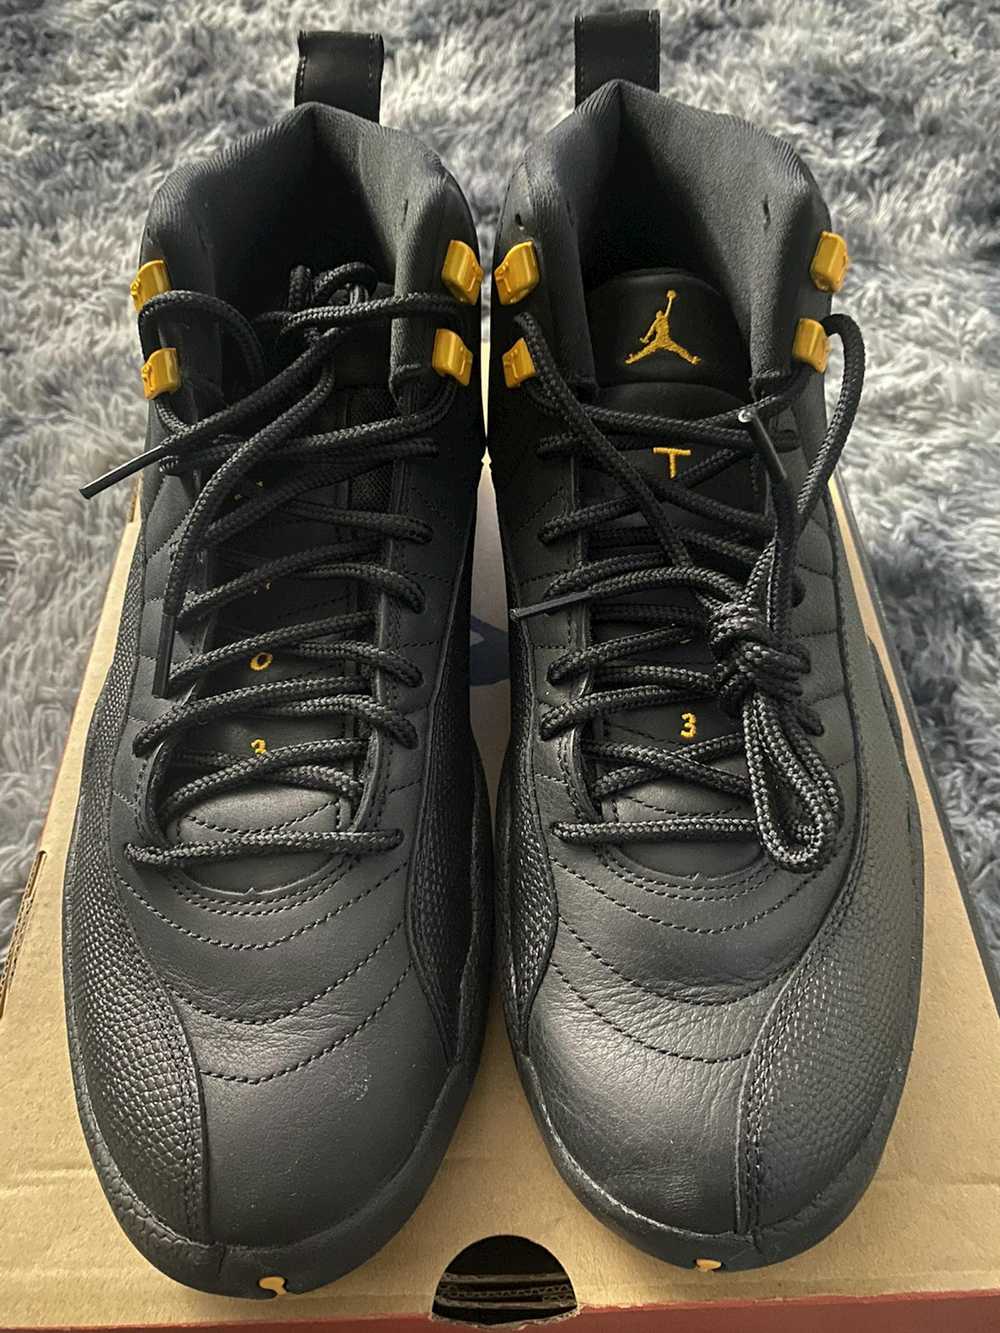 Jordan Brand × Nike Jordan Retro 12s Black Taxi - image 2